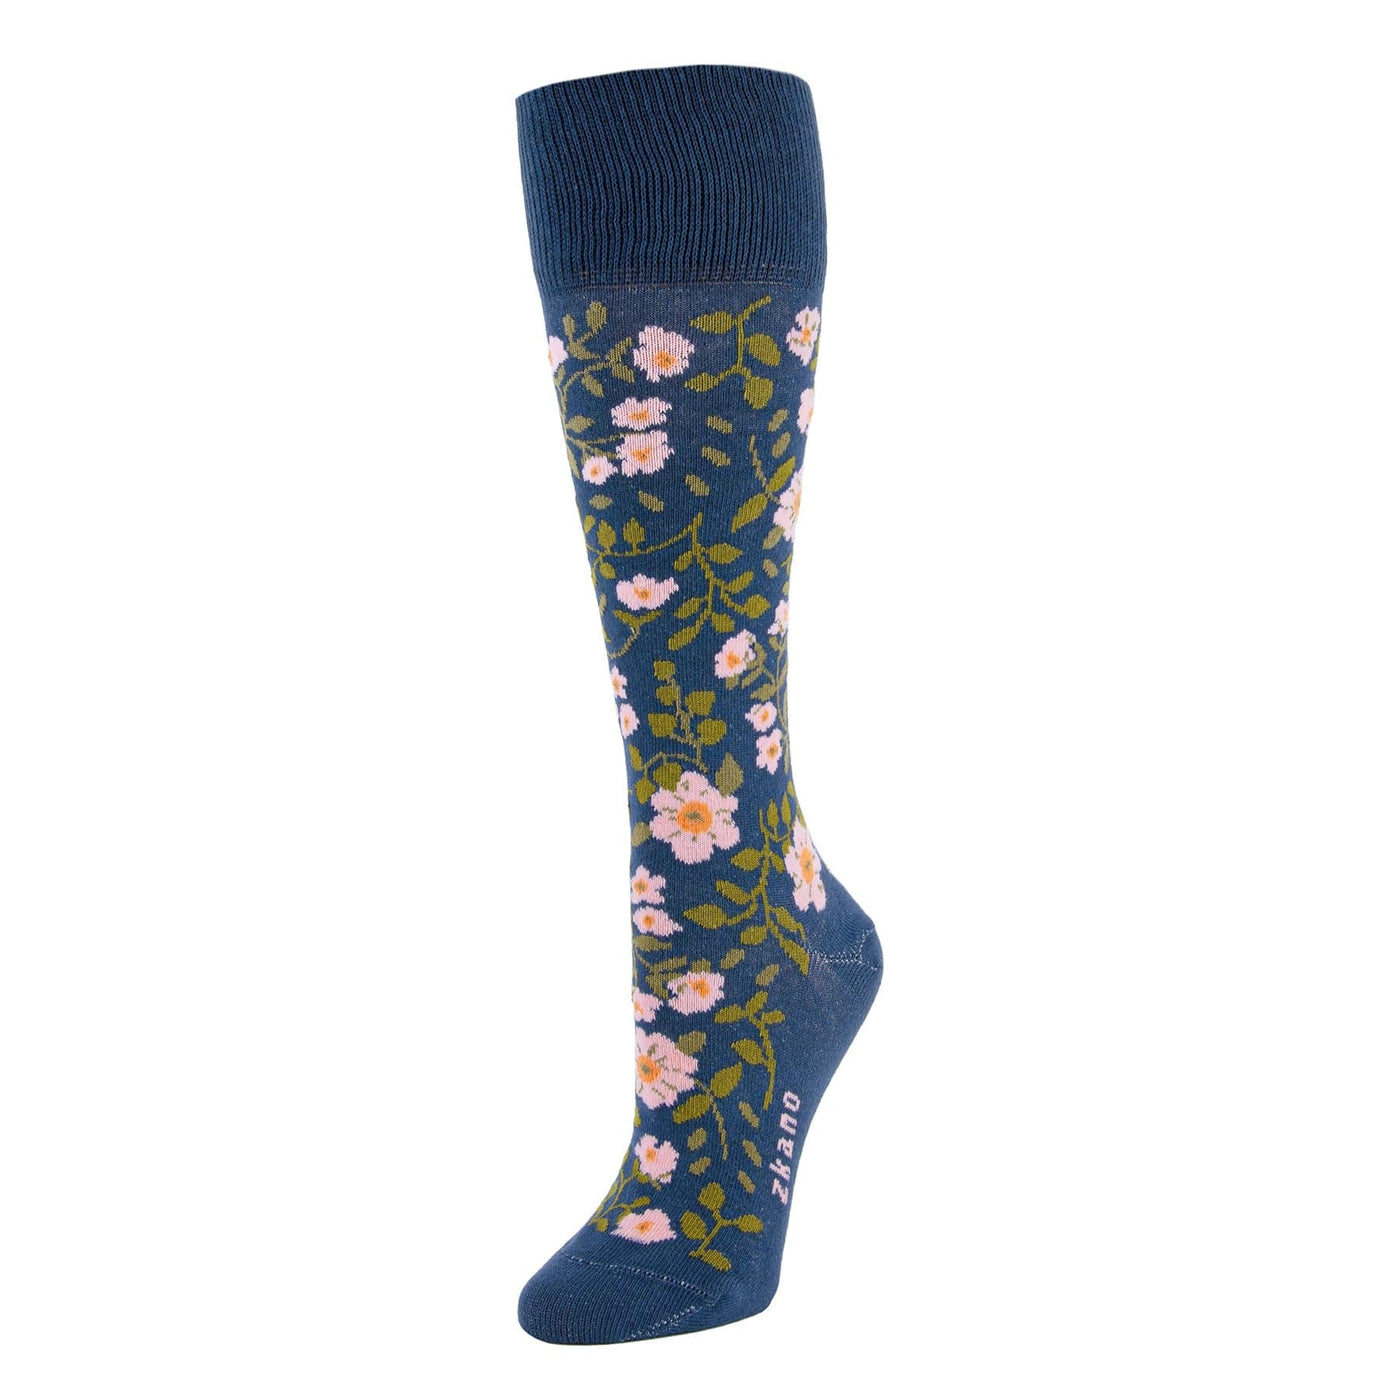 Zkano Knee High Medium secret garden - floral organic cotton knee socks - navy organic-socks-made-in-usa